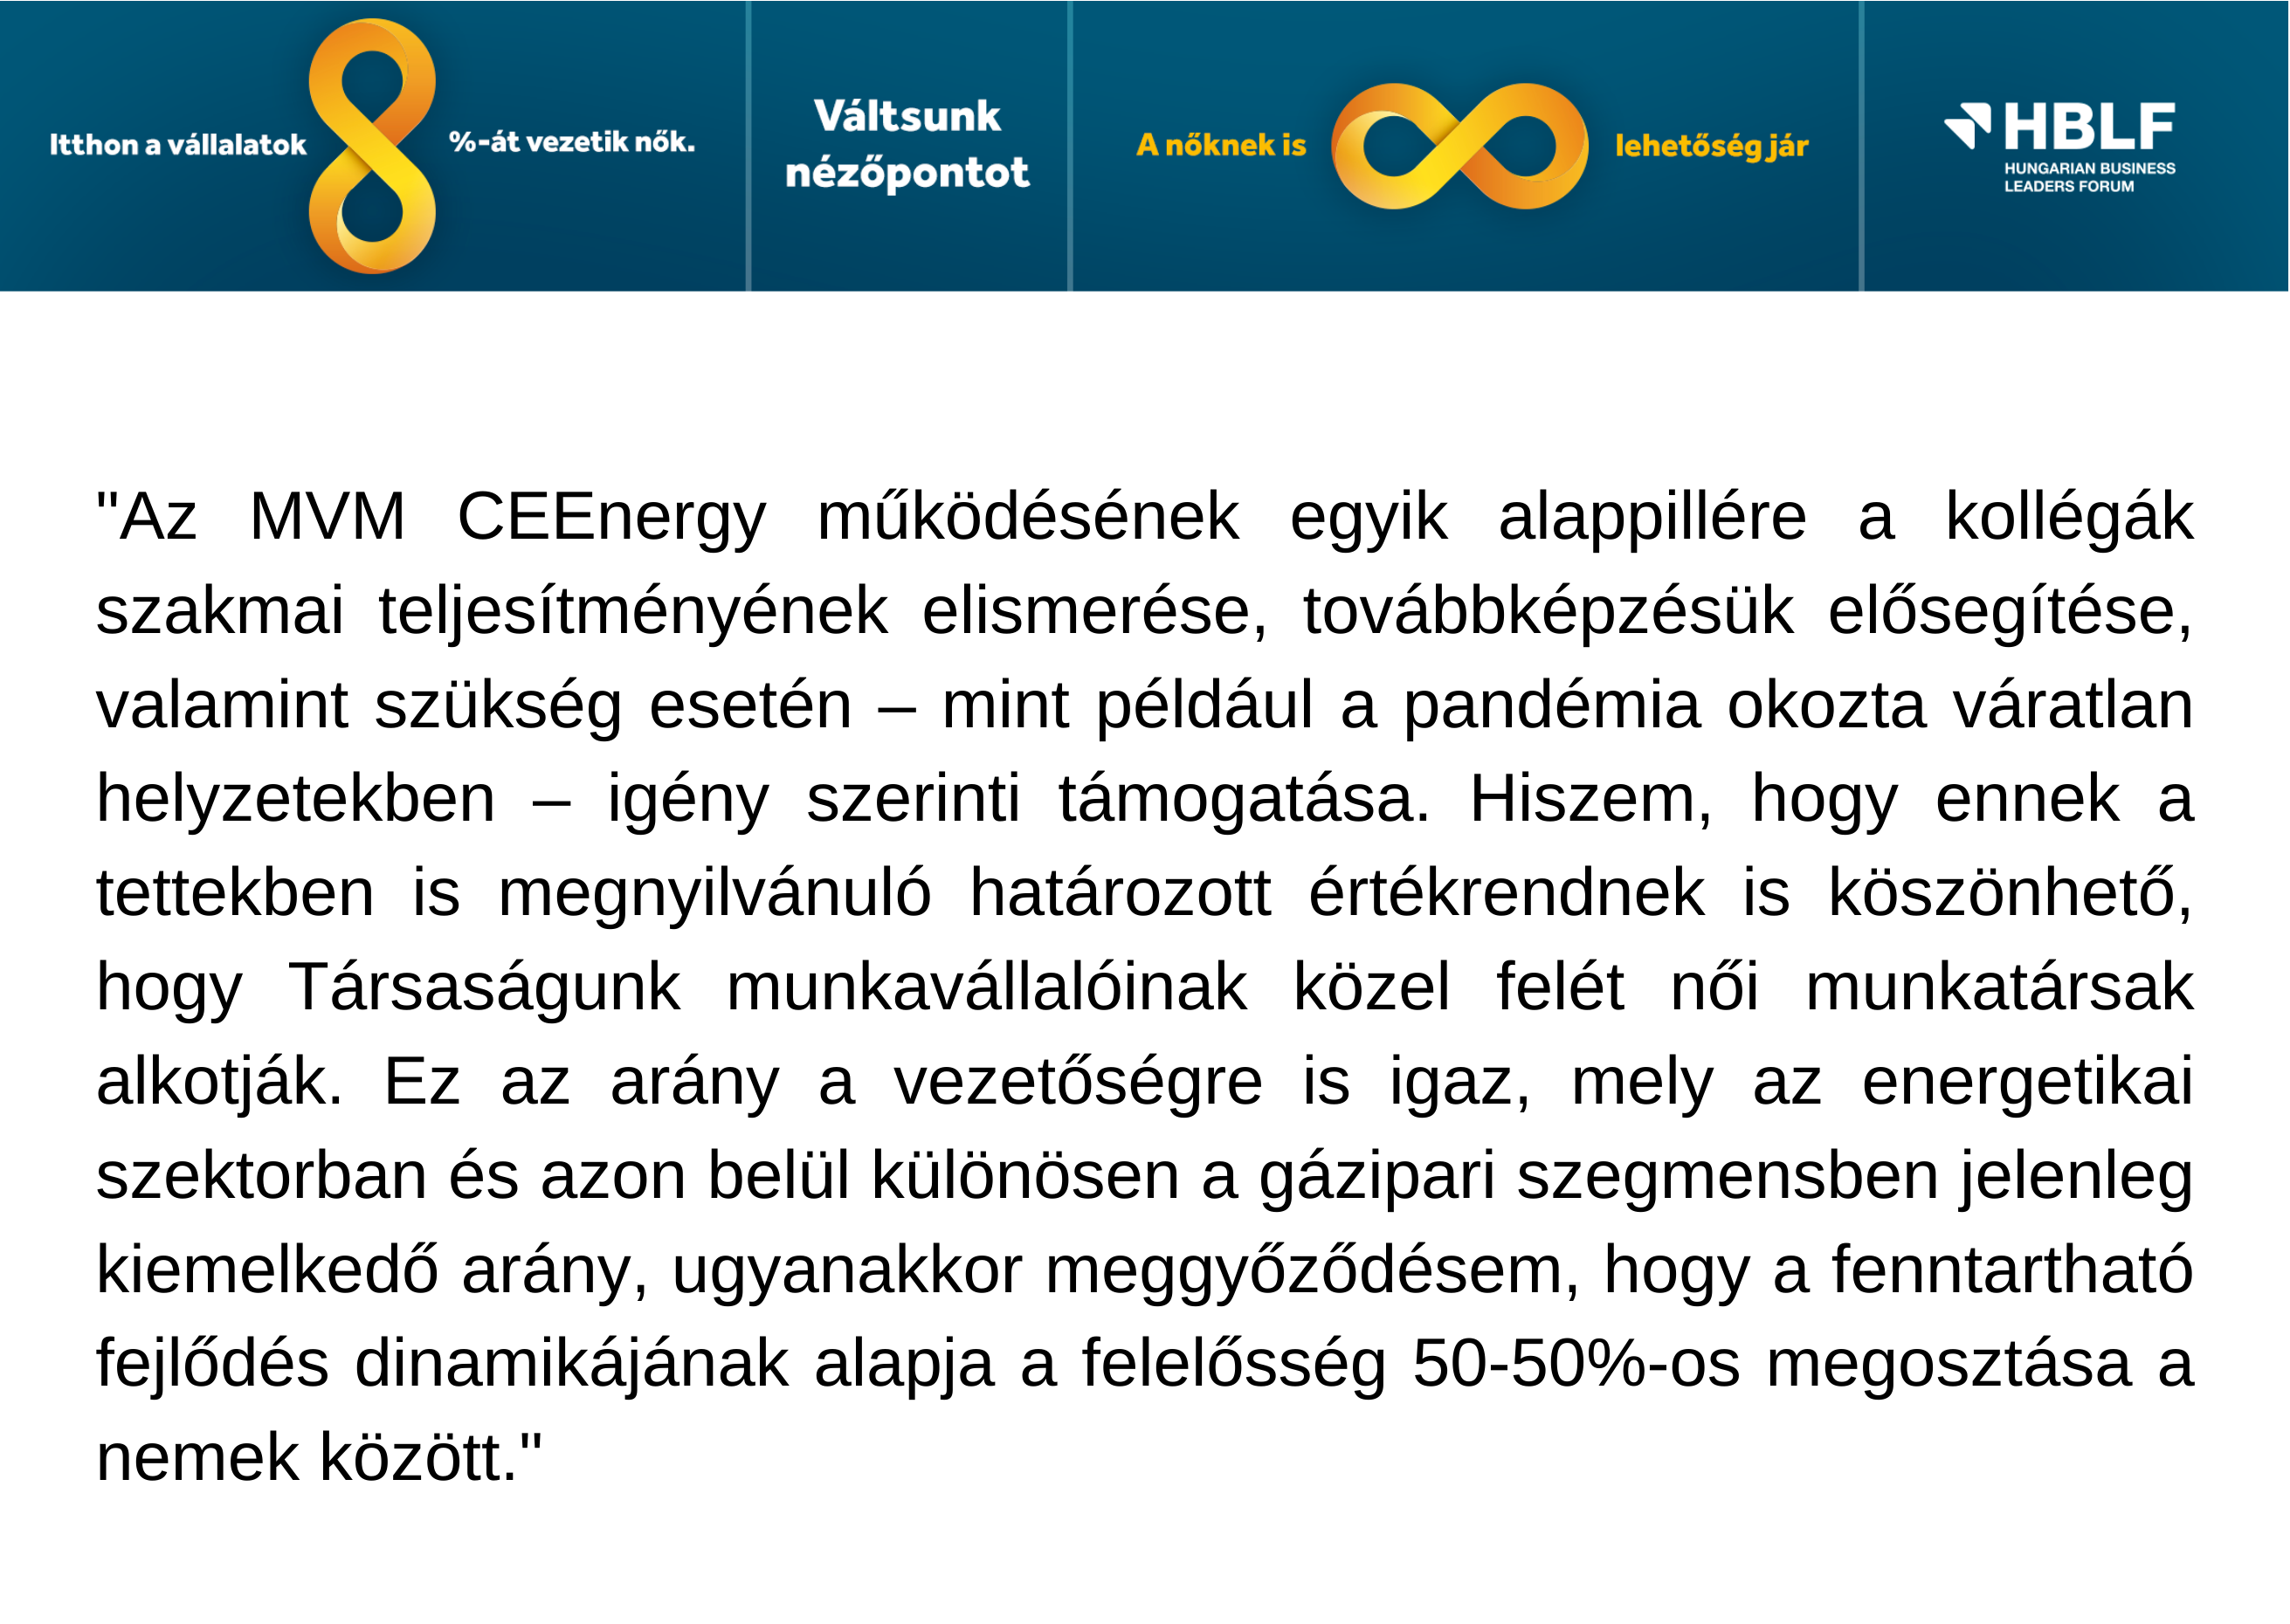 Mit hallgat el az MVM CEEnergy?